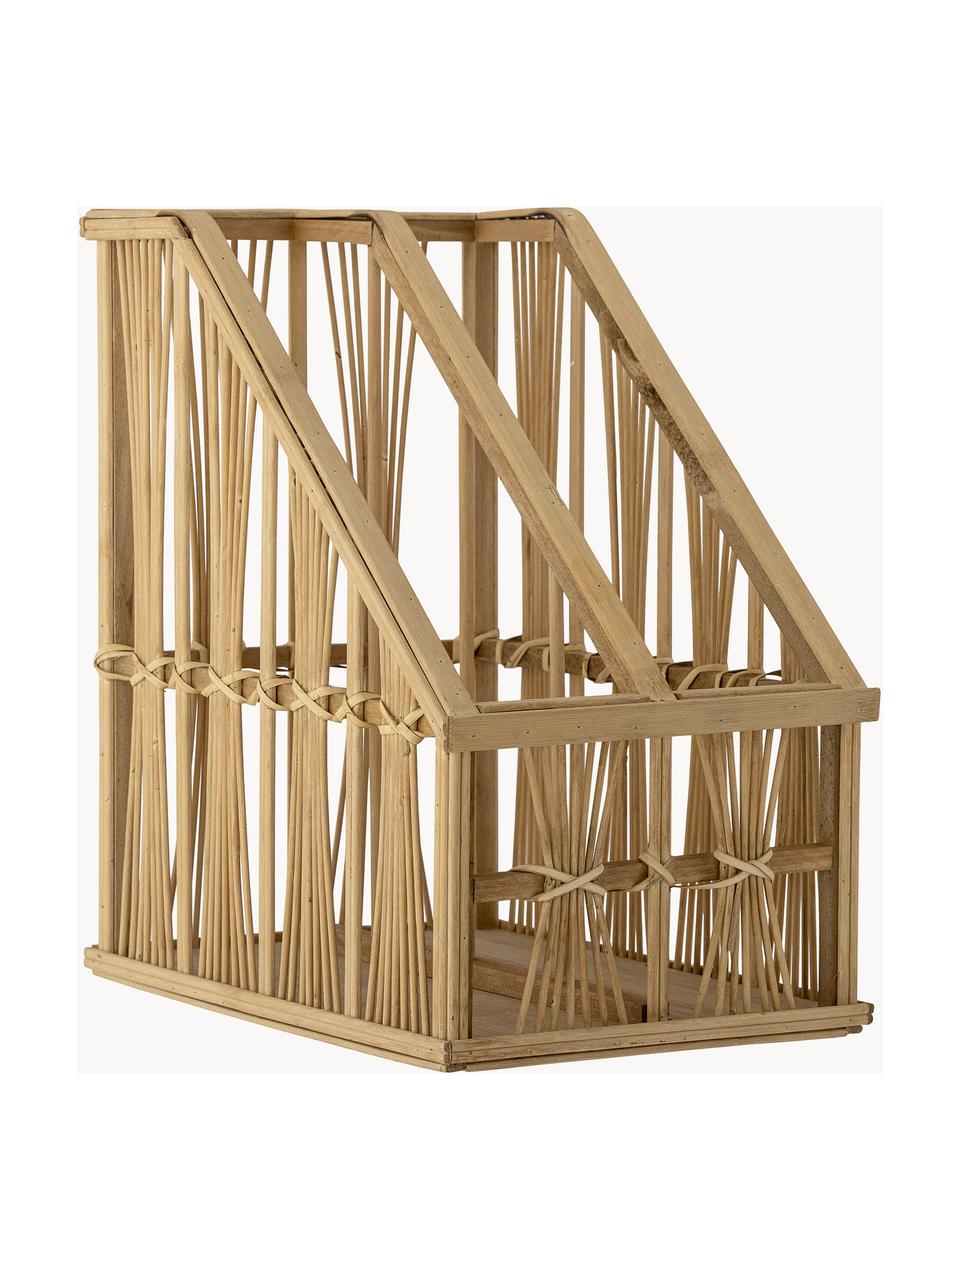 Porte-revues en bambou et rotin Tobi, Bambou, rotin, bois de sapin, contreplaqué, Brun, larg. 21 x haut. 34 cm